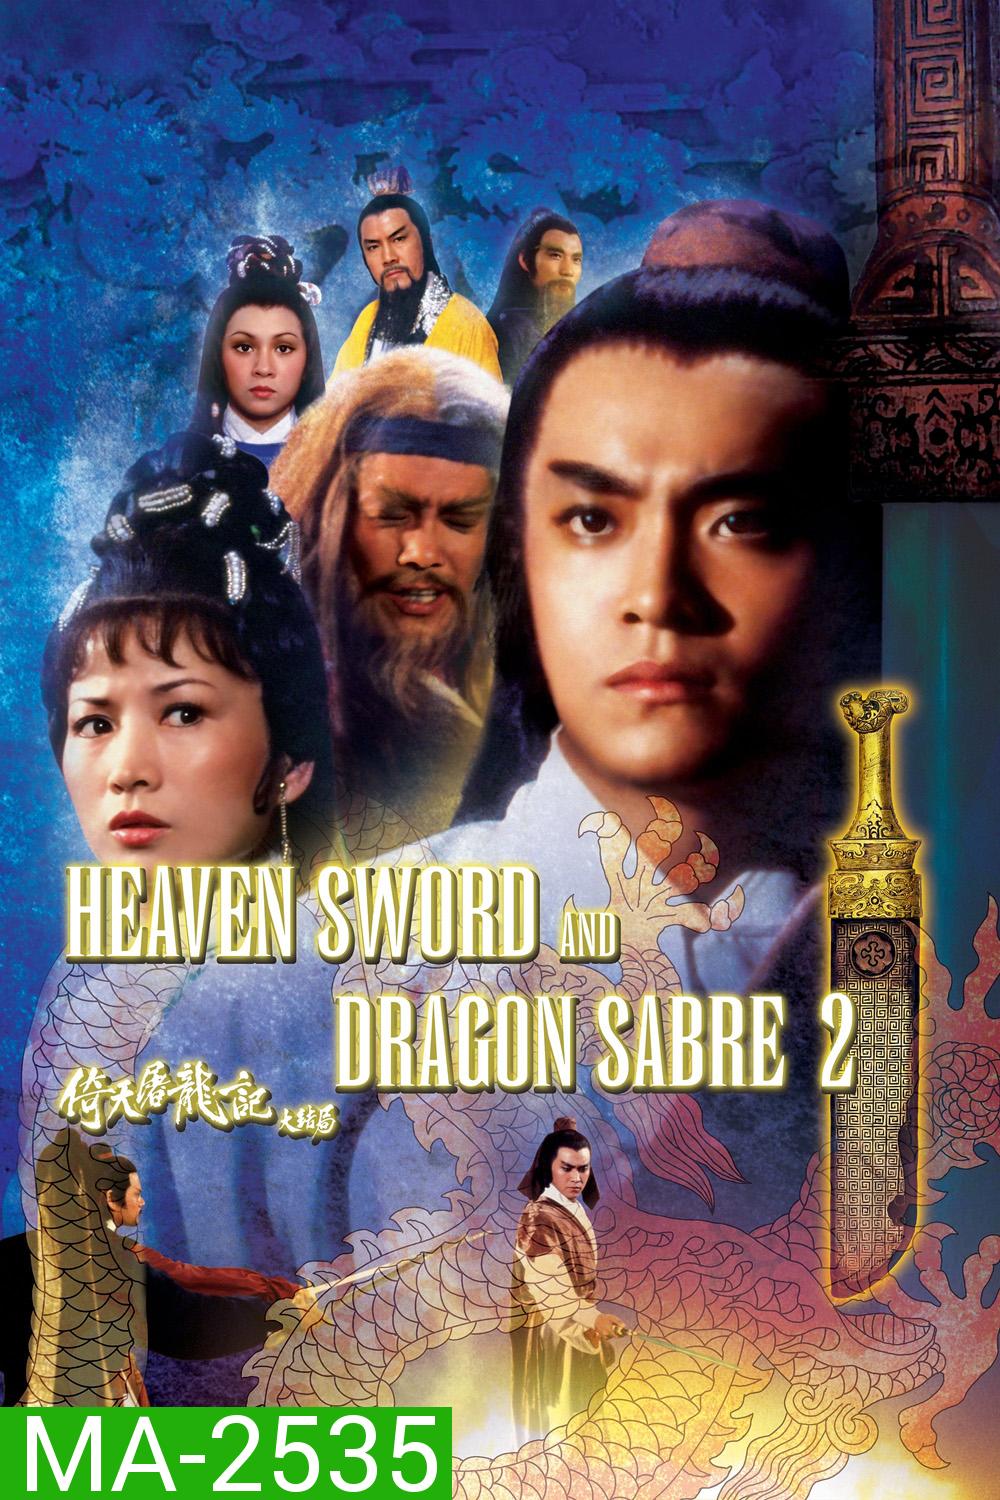 Heaven Sword and Dragon Sabre 2 (1978) ลูกมังกรหยก 2